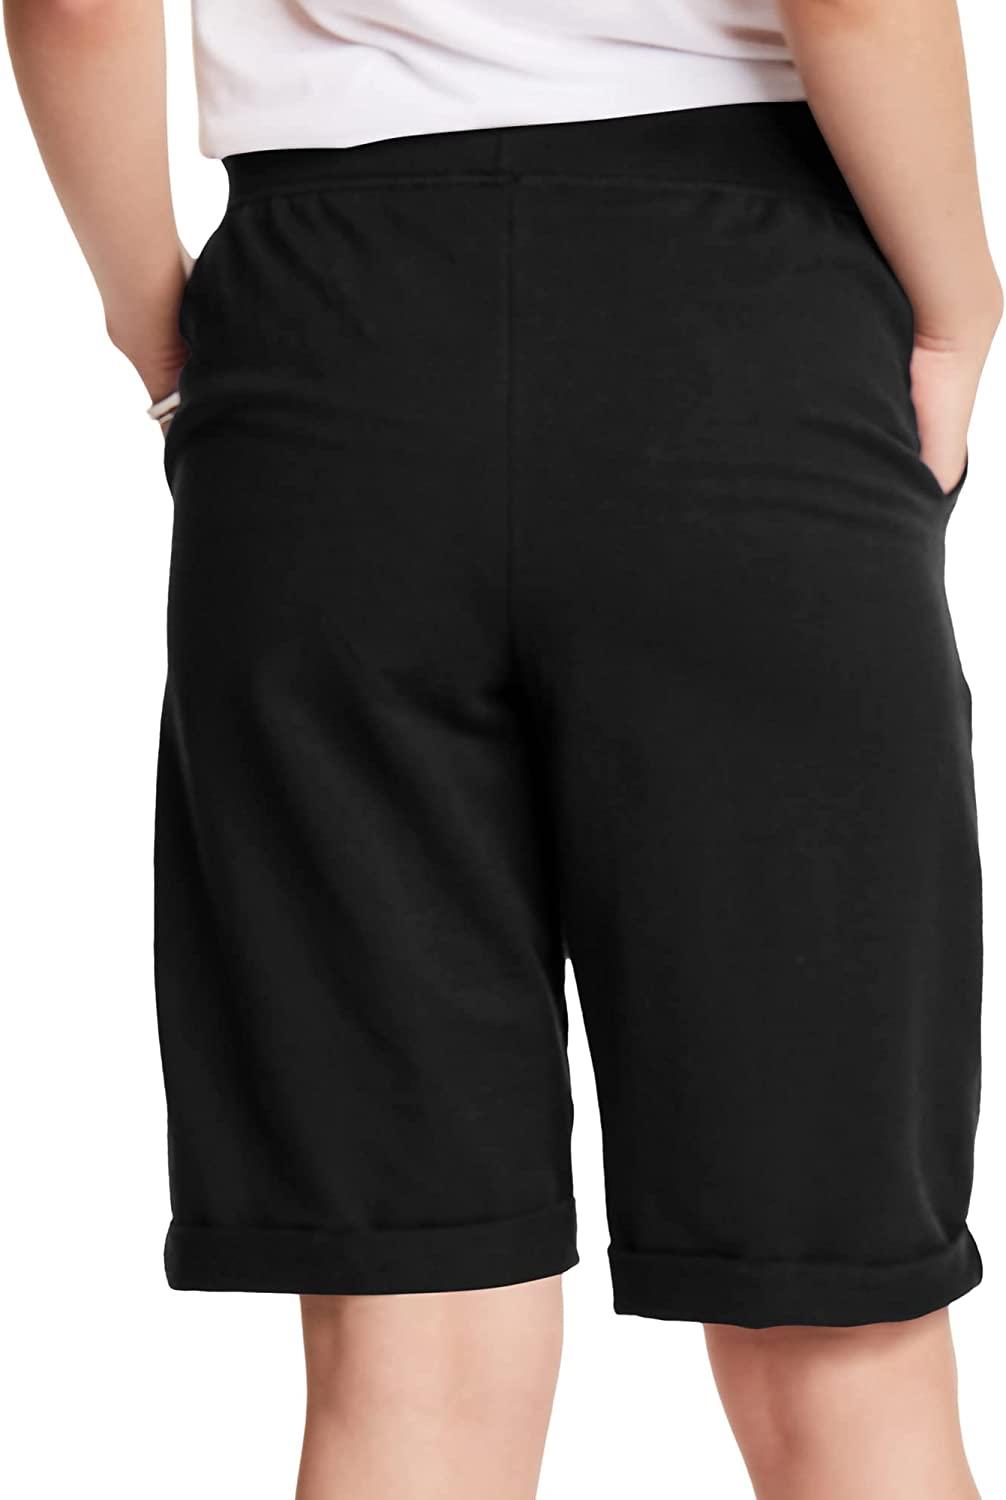 Hanes Women's French Terry Capri Pants, Pockets